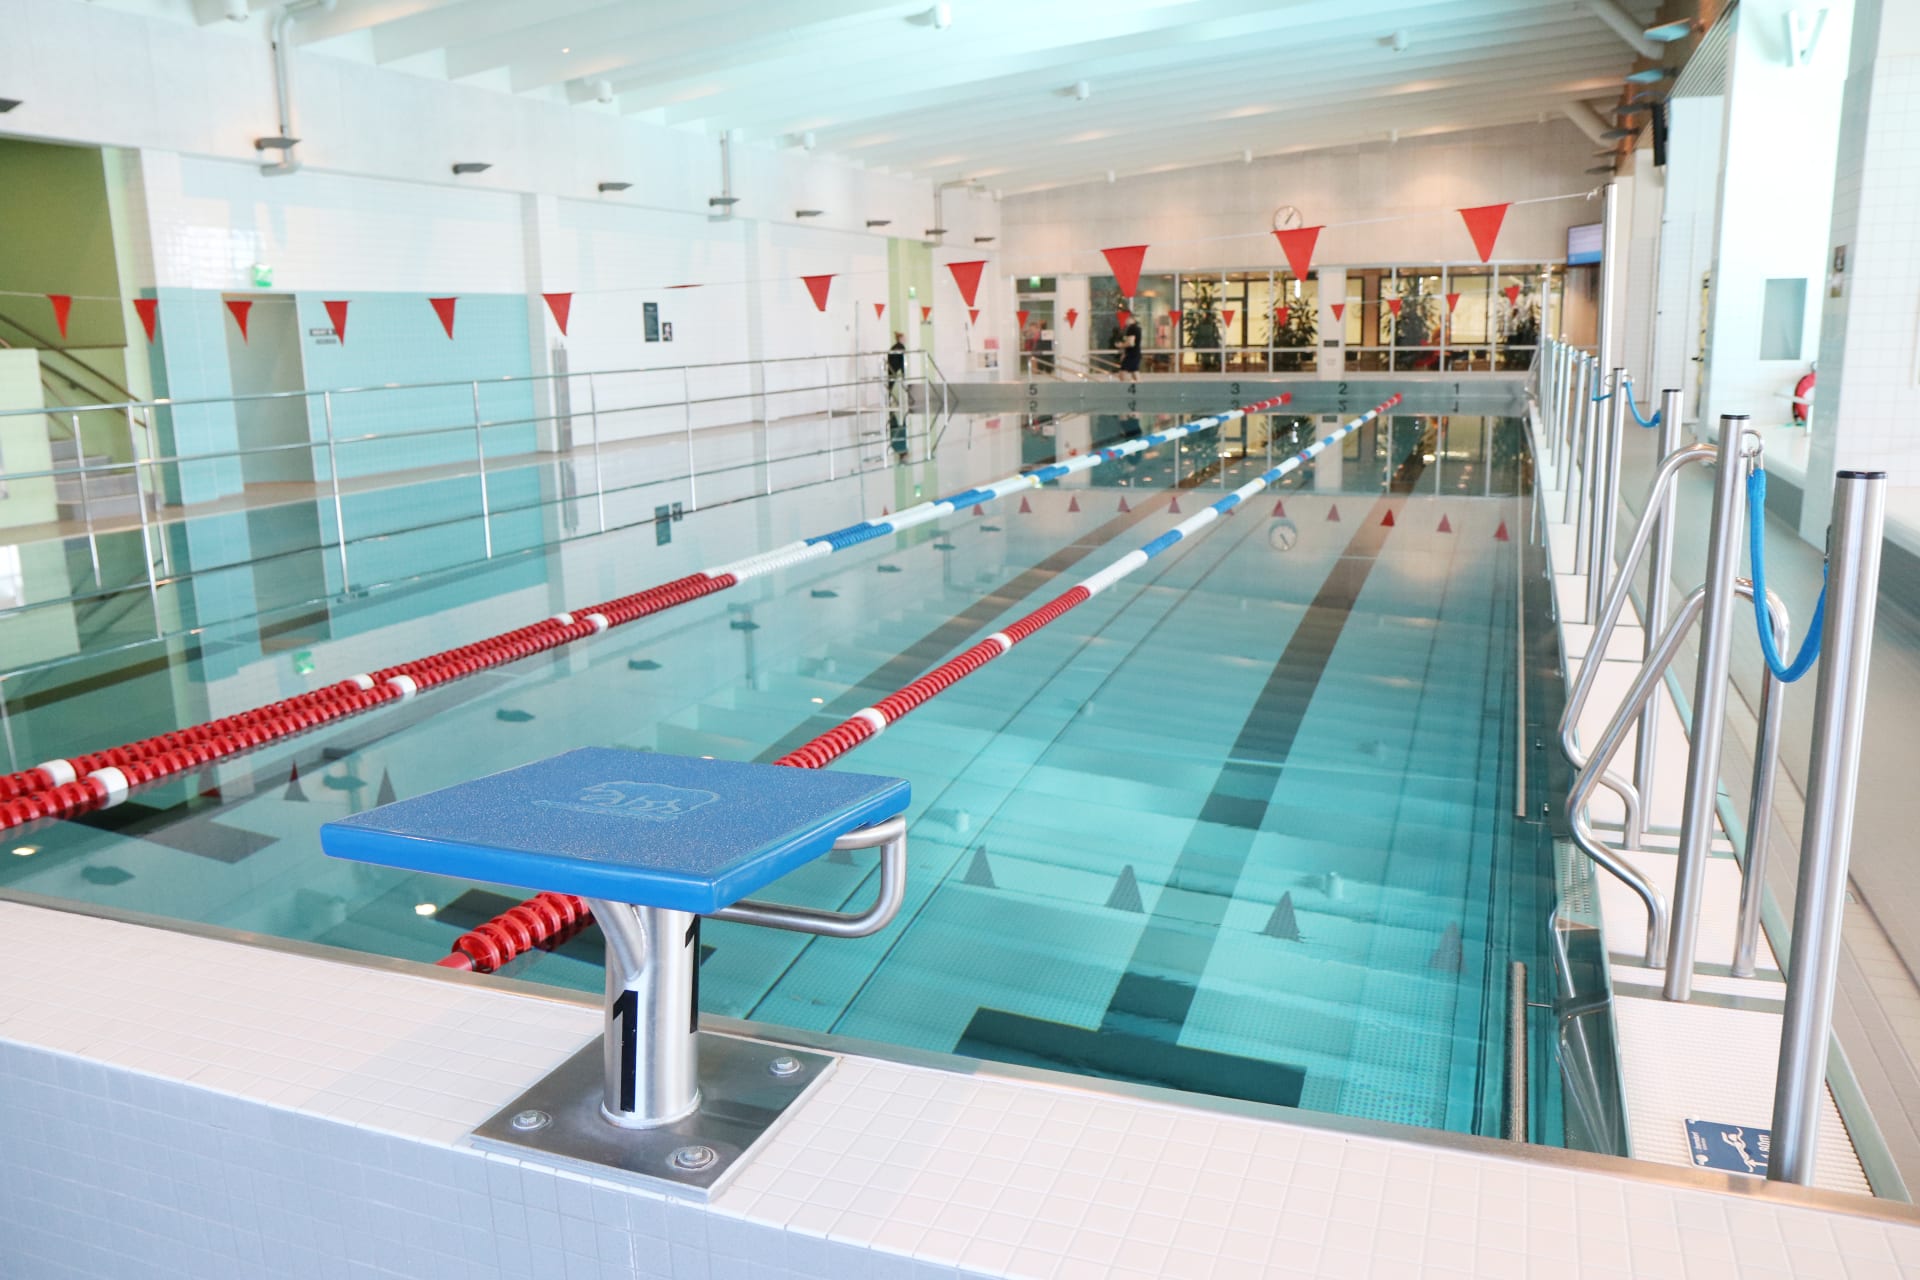 Indoor swimming pool lanes